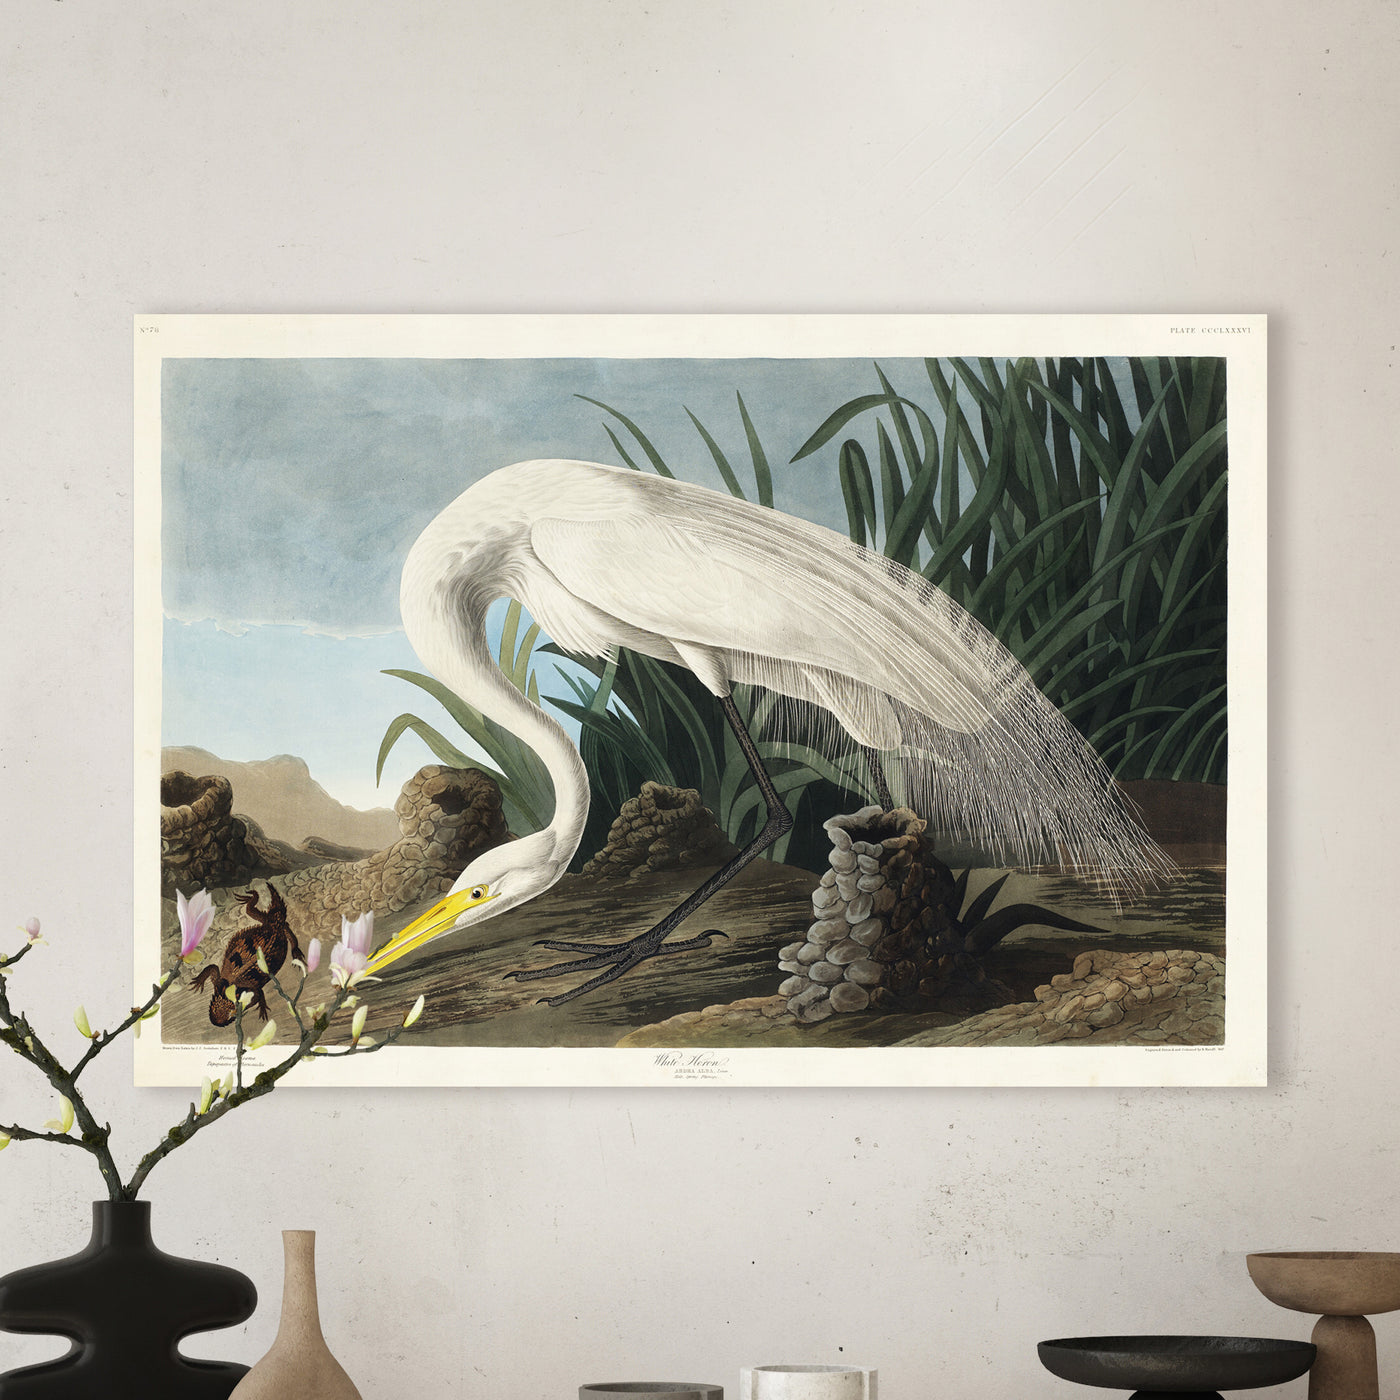 Witte reiger- John James Audubon